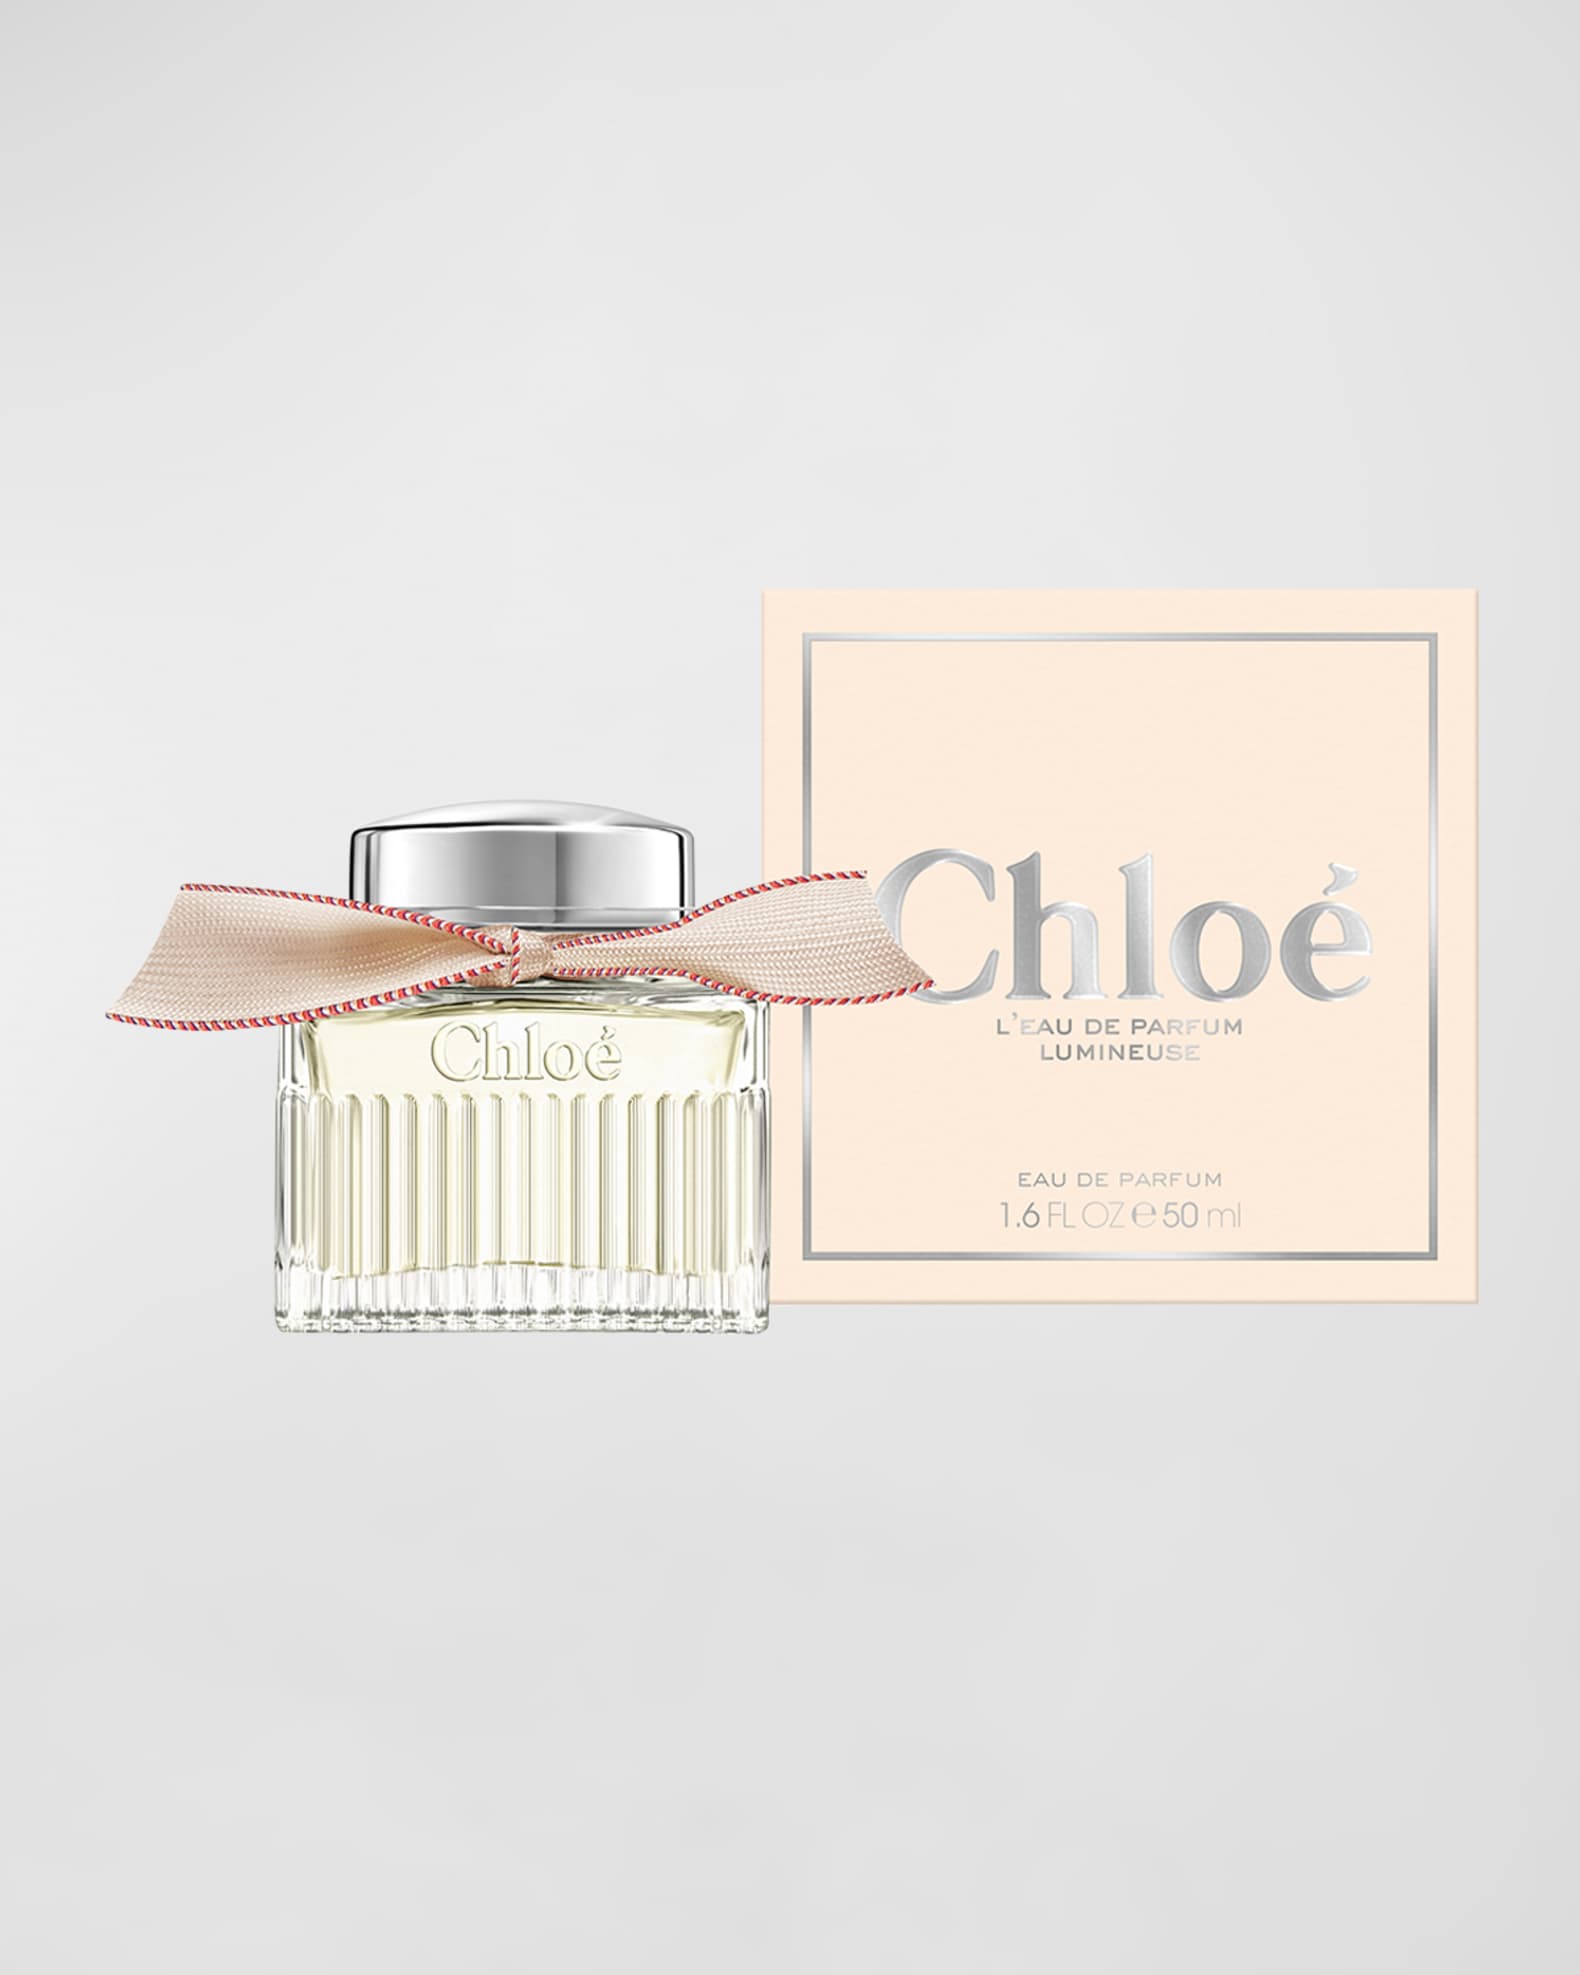 Chloe Leau de Parfum Lumineuse, 1.6 oz.